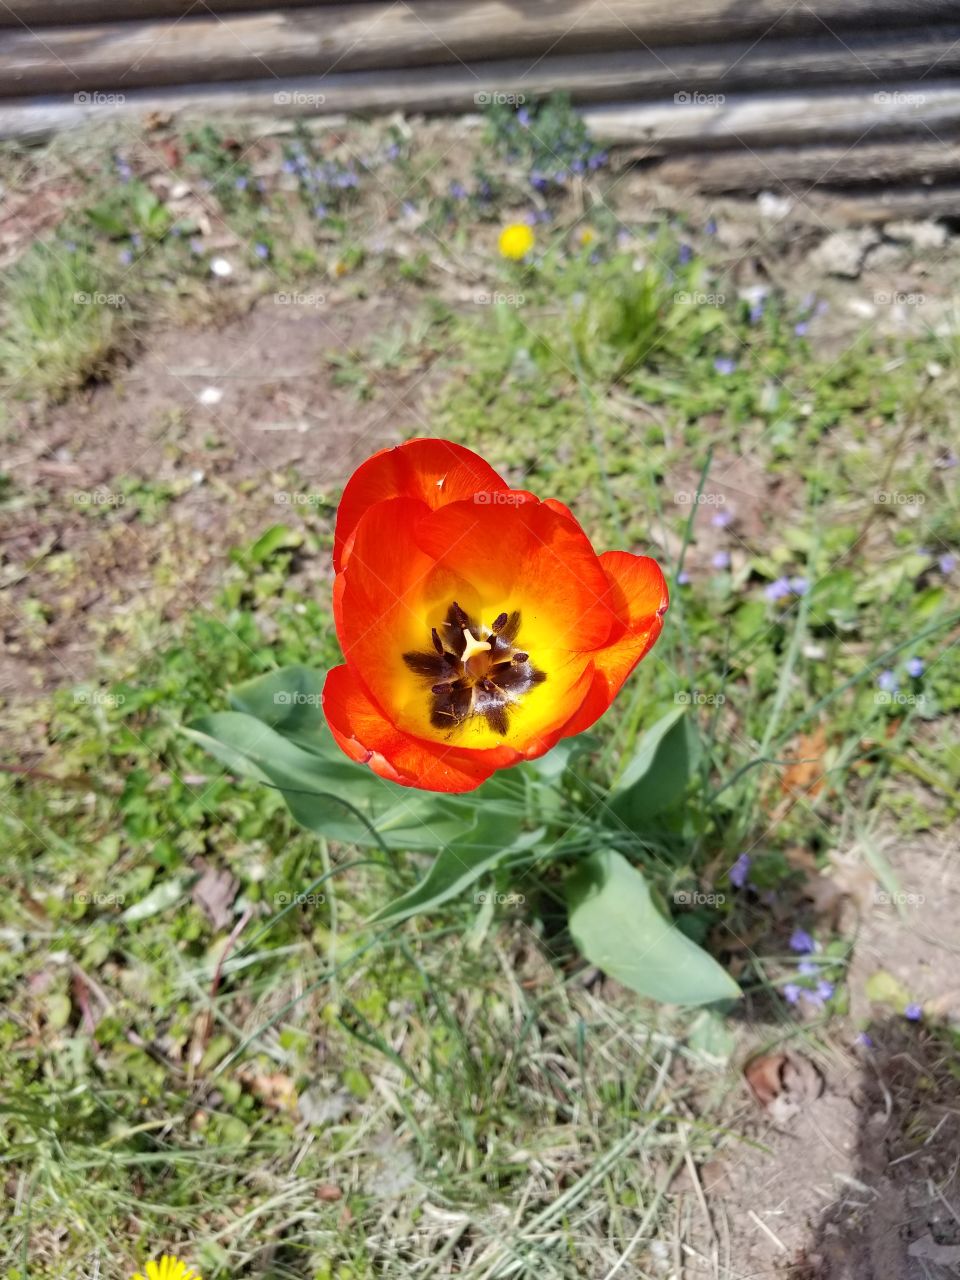 The sole tulip